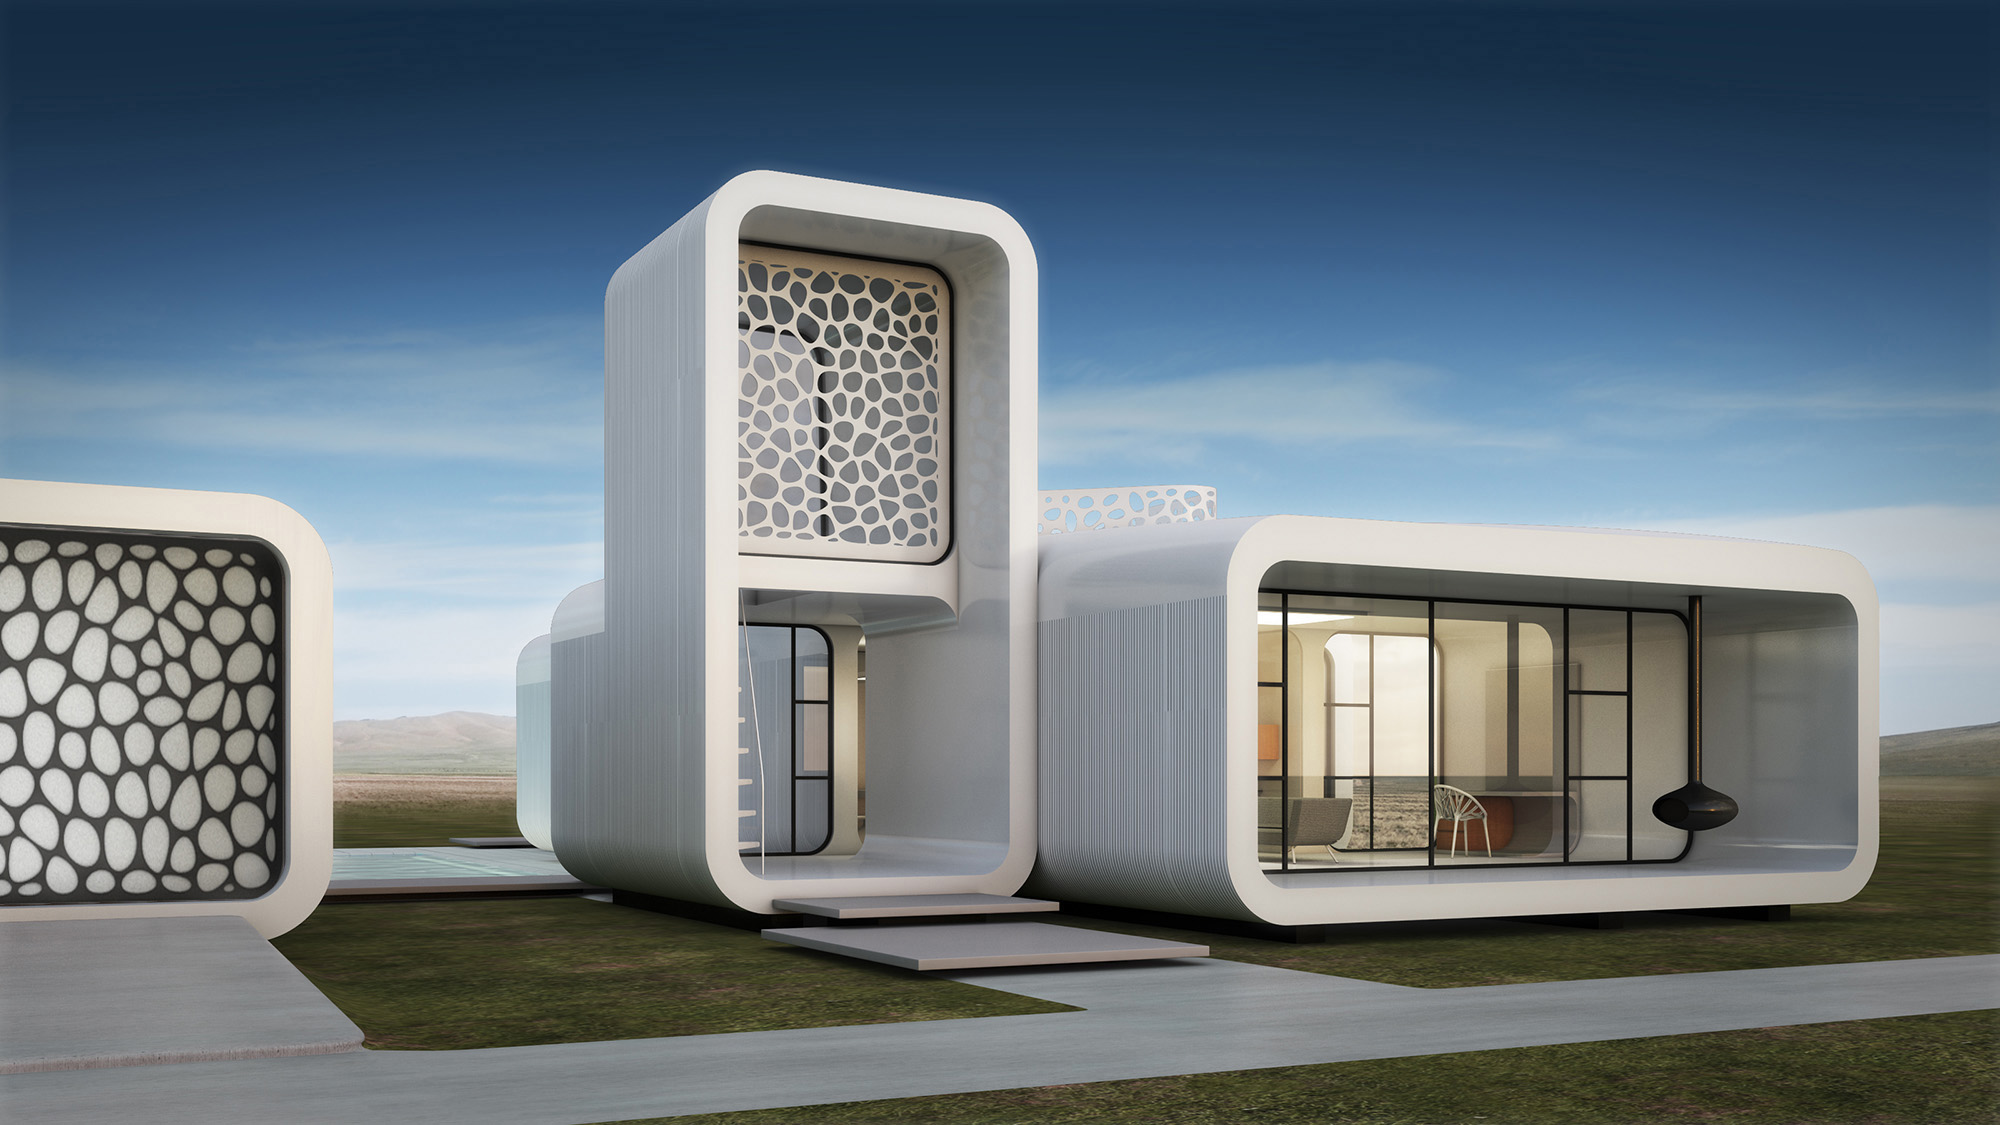 Dubai's 3D Printed Office